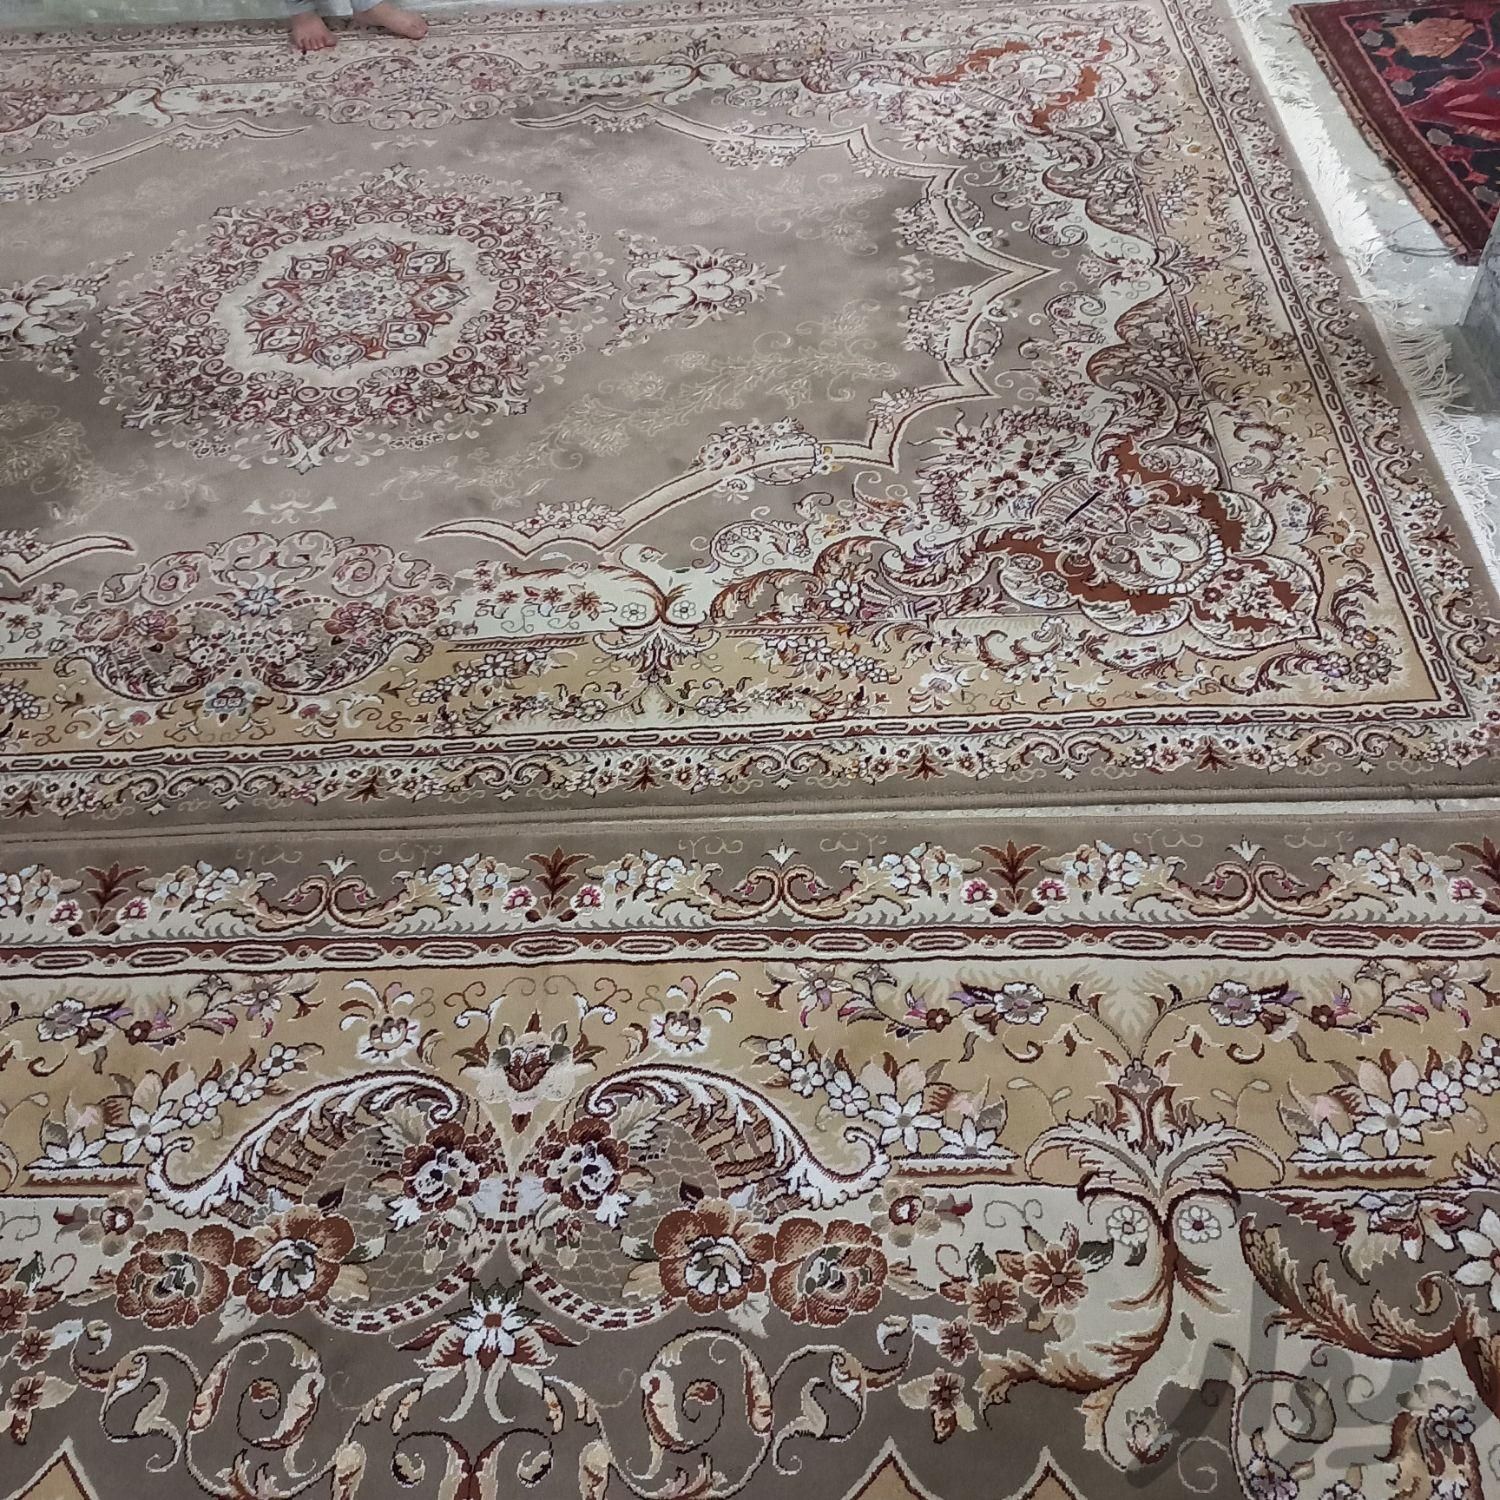 سه عدد فرش|فرش|تهران, علی‌آباد|دیوار